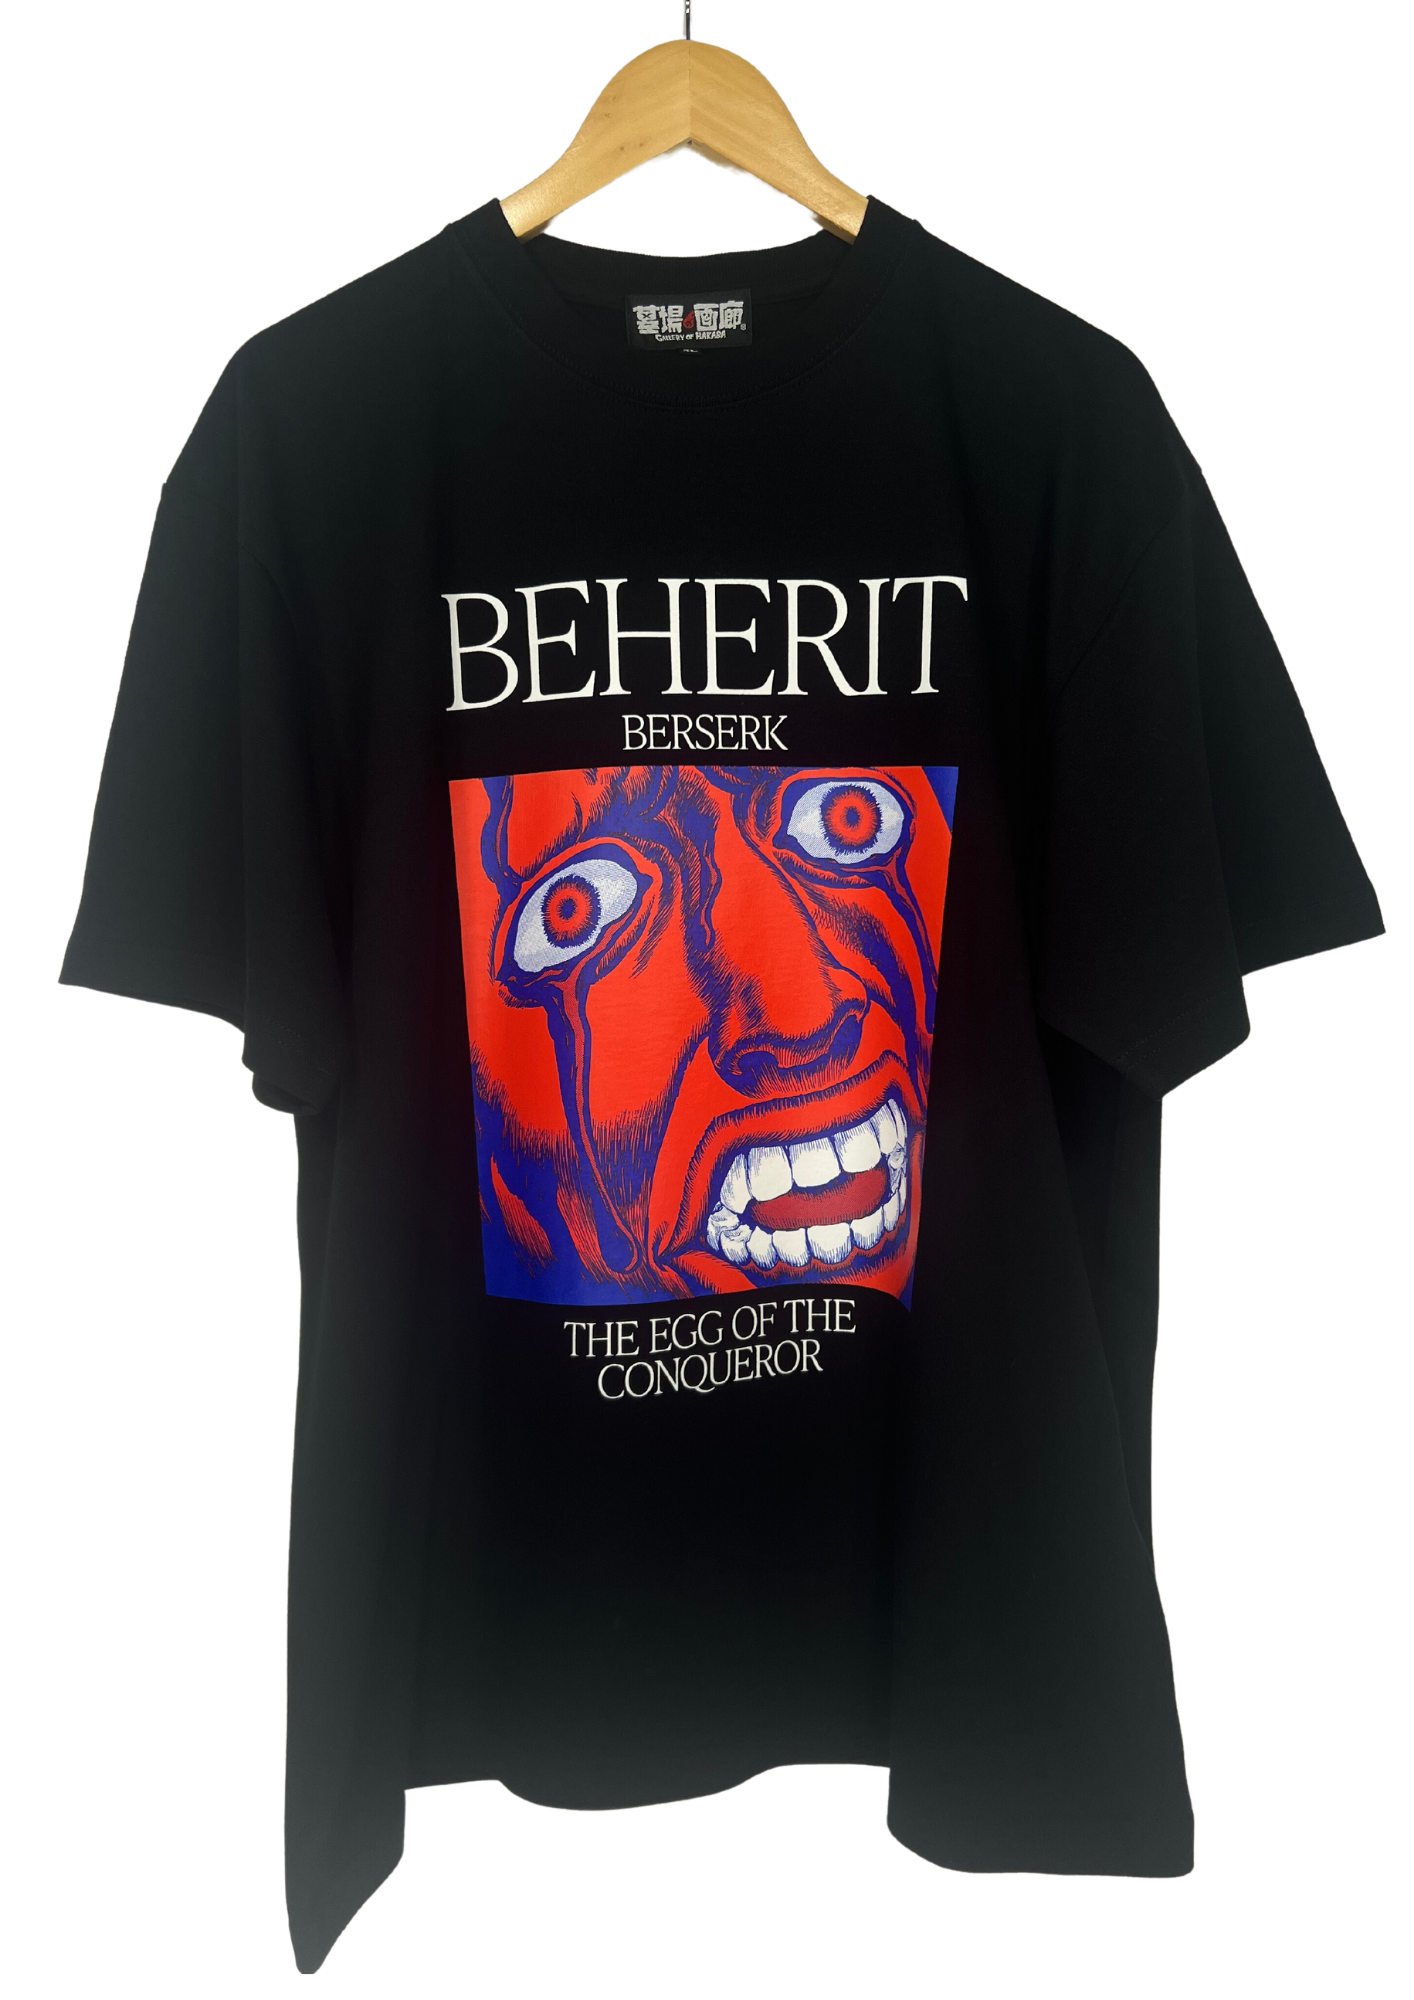 Berserk x Hakabagarou Exhibition Limited Beherit T-shirt